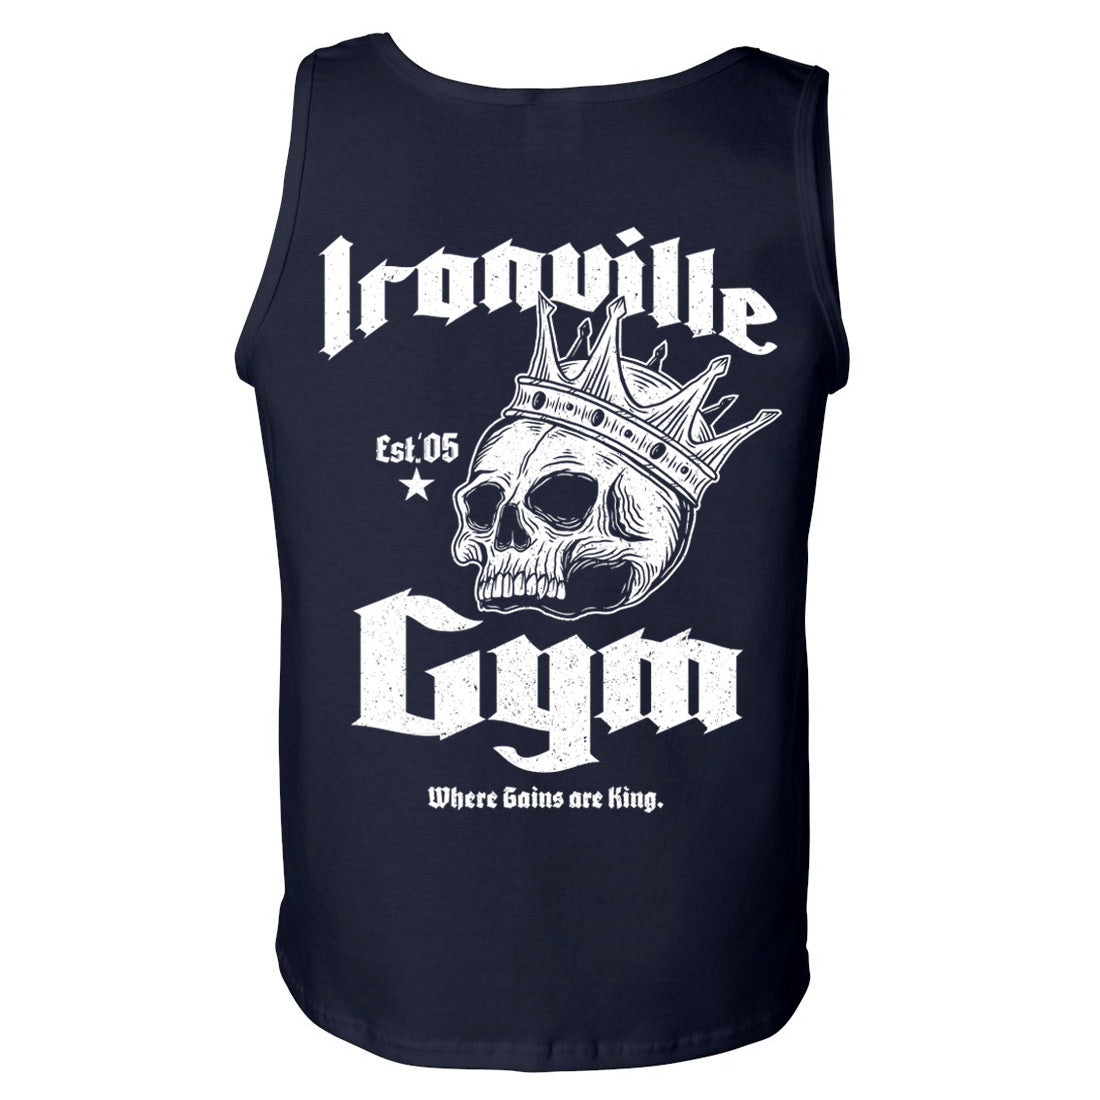 Ironville GYM KING Standard Cut Gym Tanktop